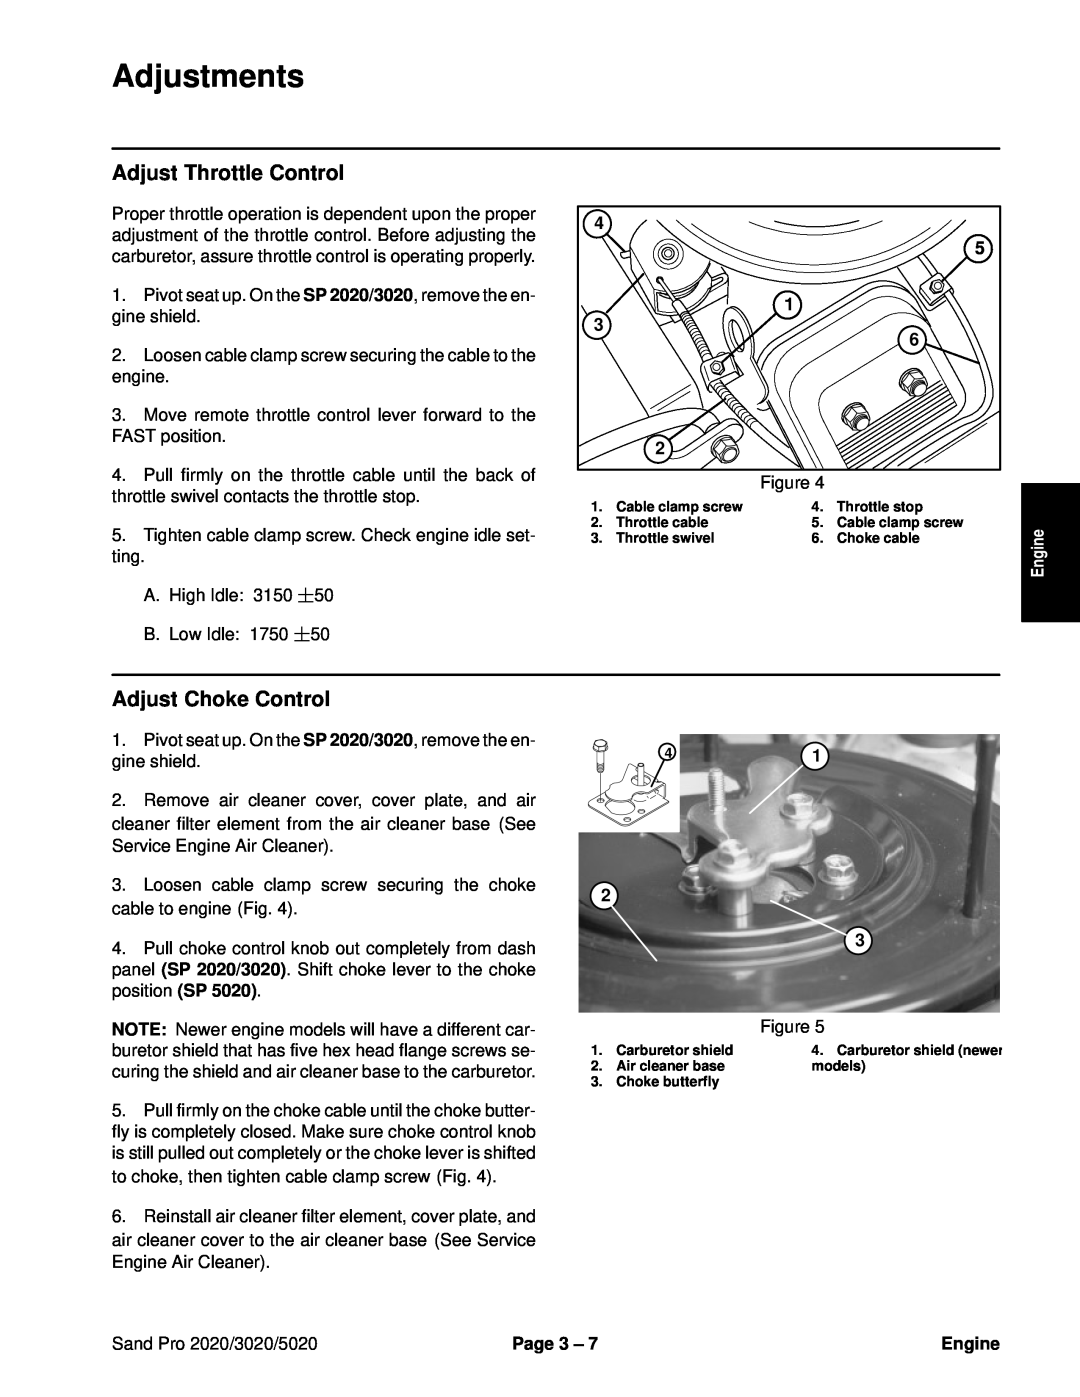 Toro service manual Adjustments, Adjust Throttle Control, Adjust Choke Control, Engine, Sand Pro 2020/3020/5020, Page 3 